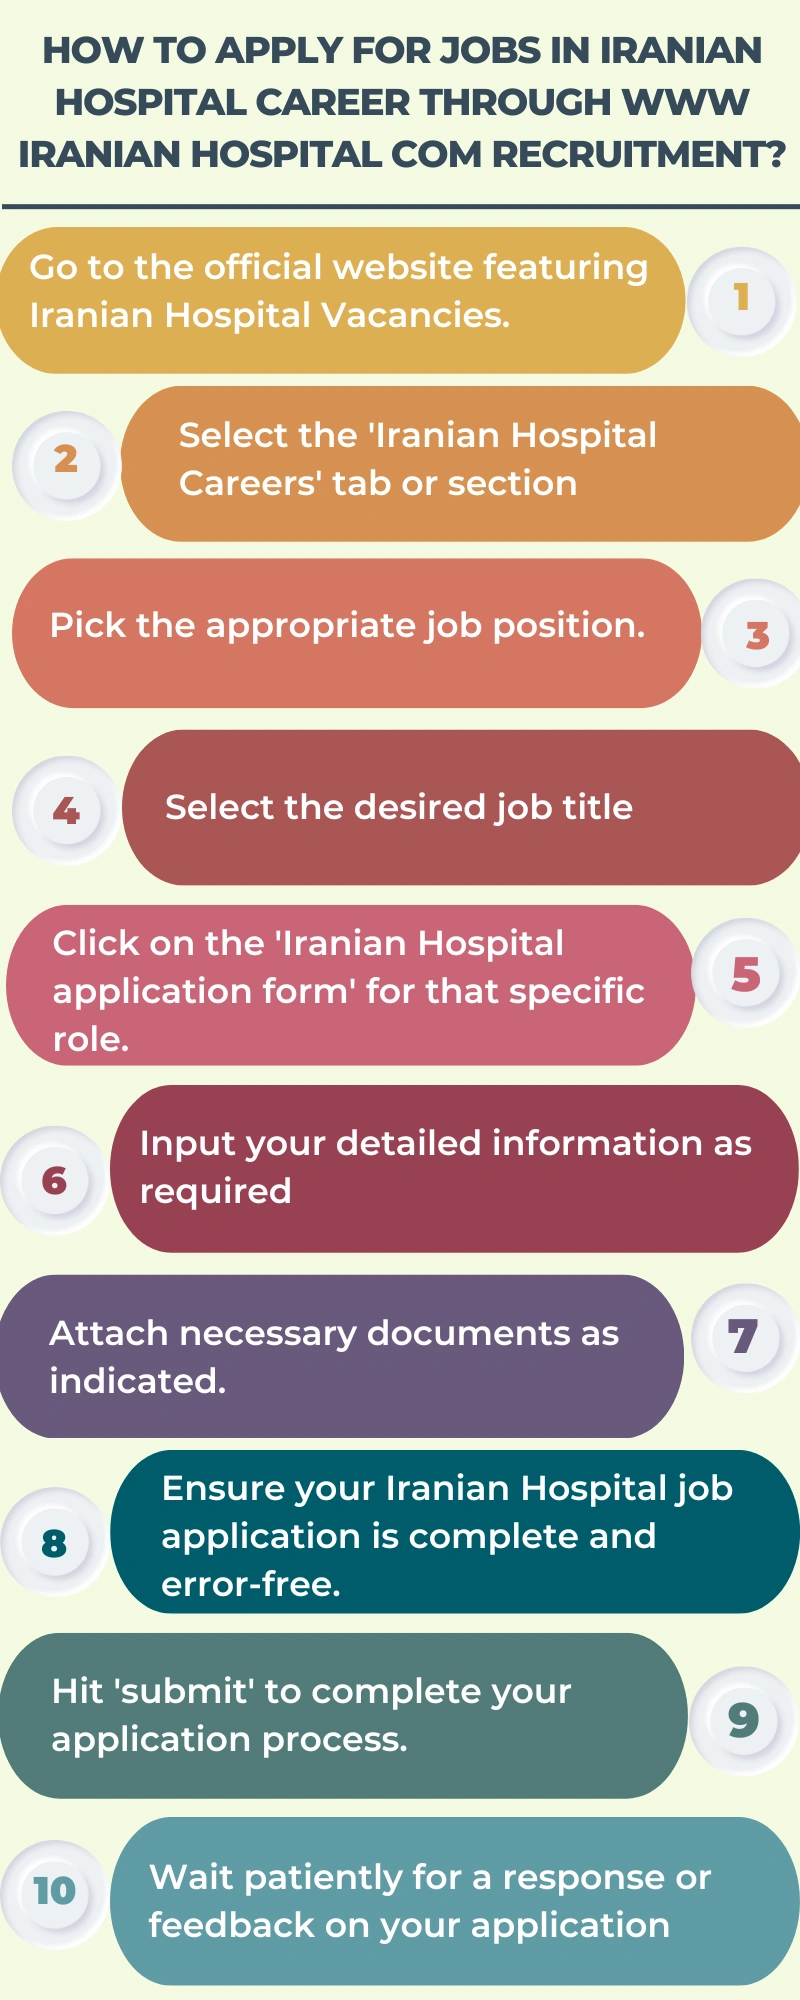 How to Apply for Jobs in Iranian Hospital Career through www Iranian Hospital com recruitment?